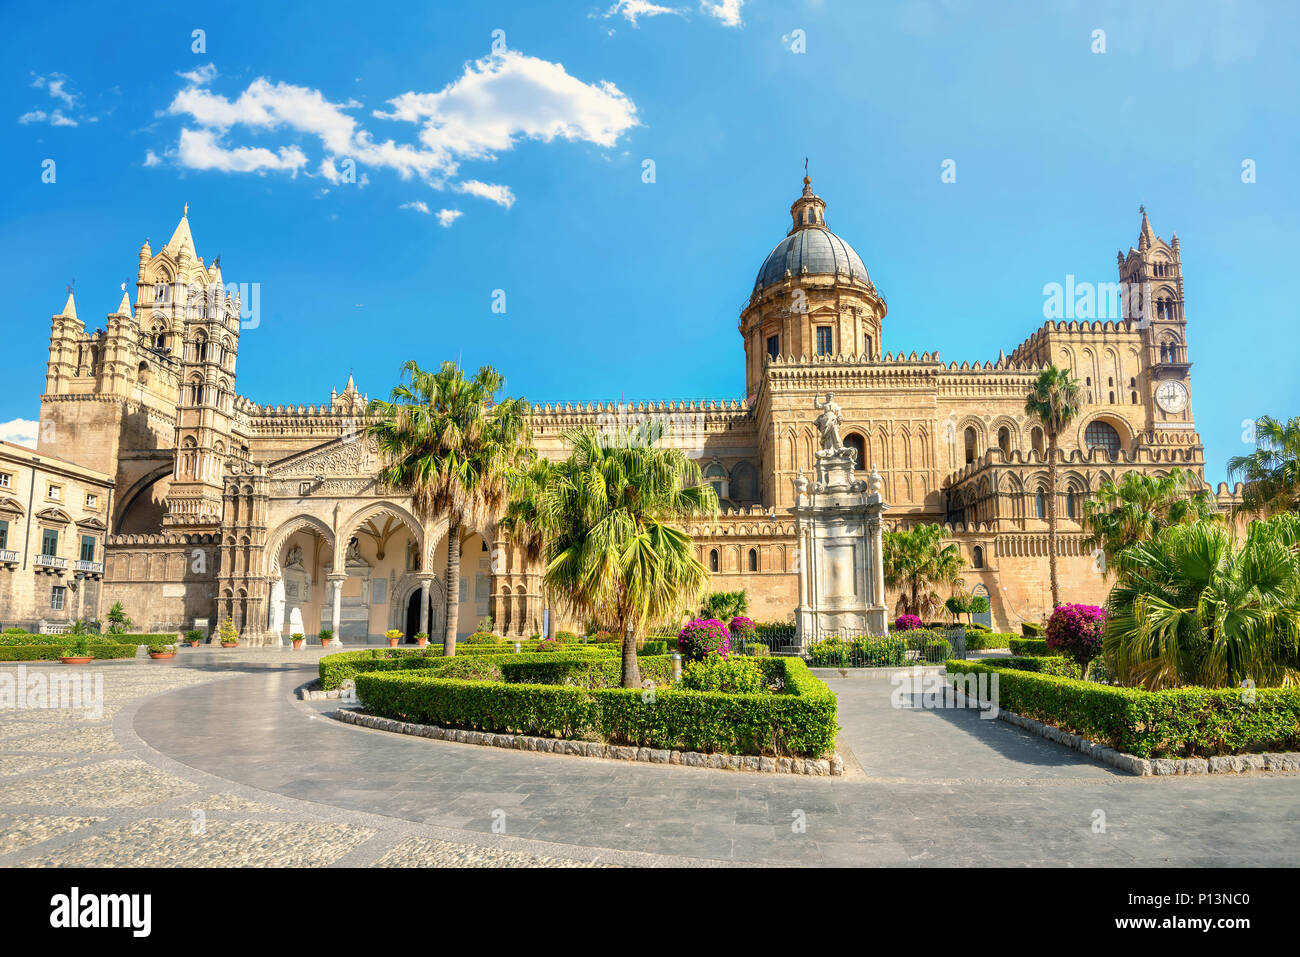 Blick auf die Kathedrale von Palermo (Duomo di Palermo). Palermo, Sizilien, Italien Stockfoto